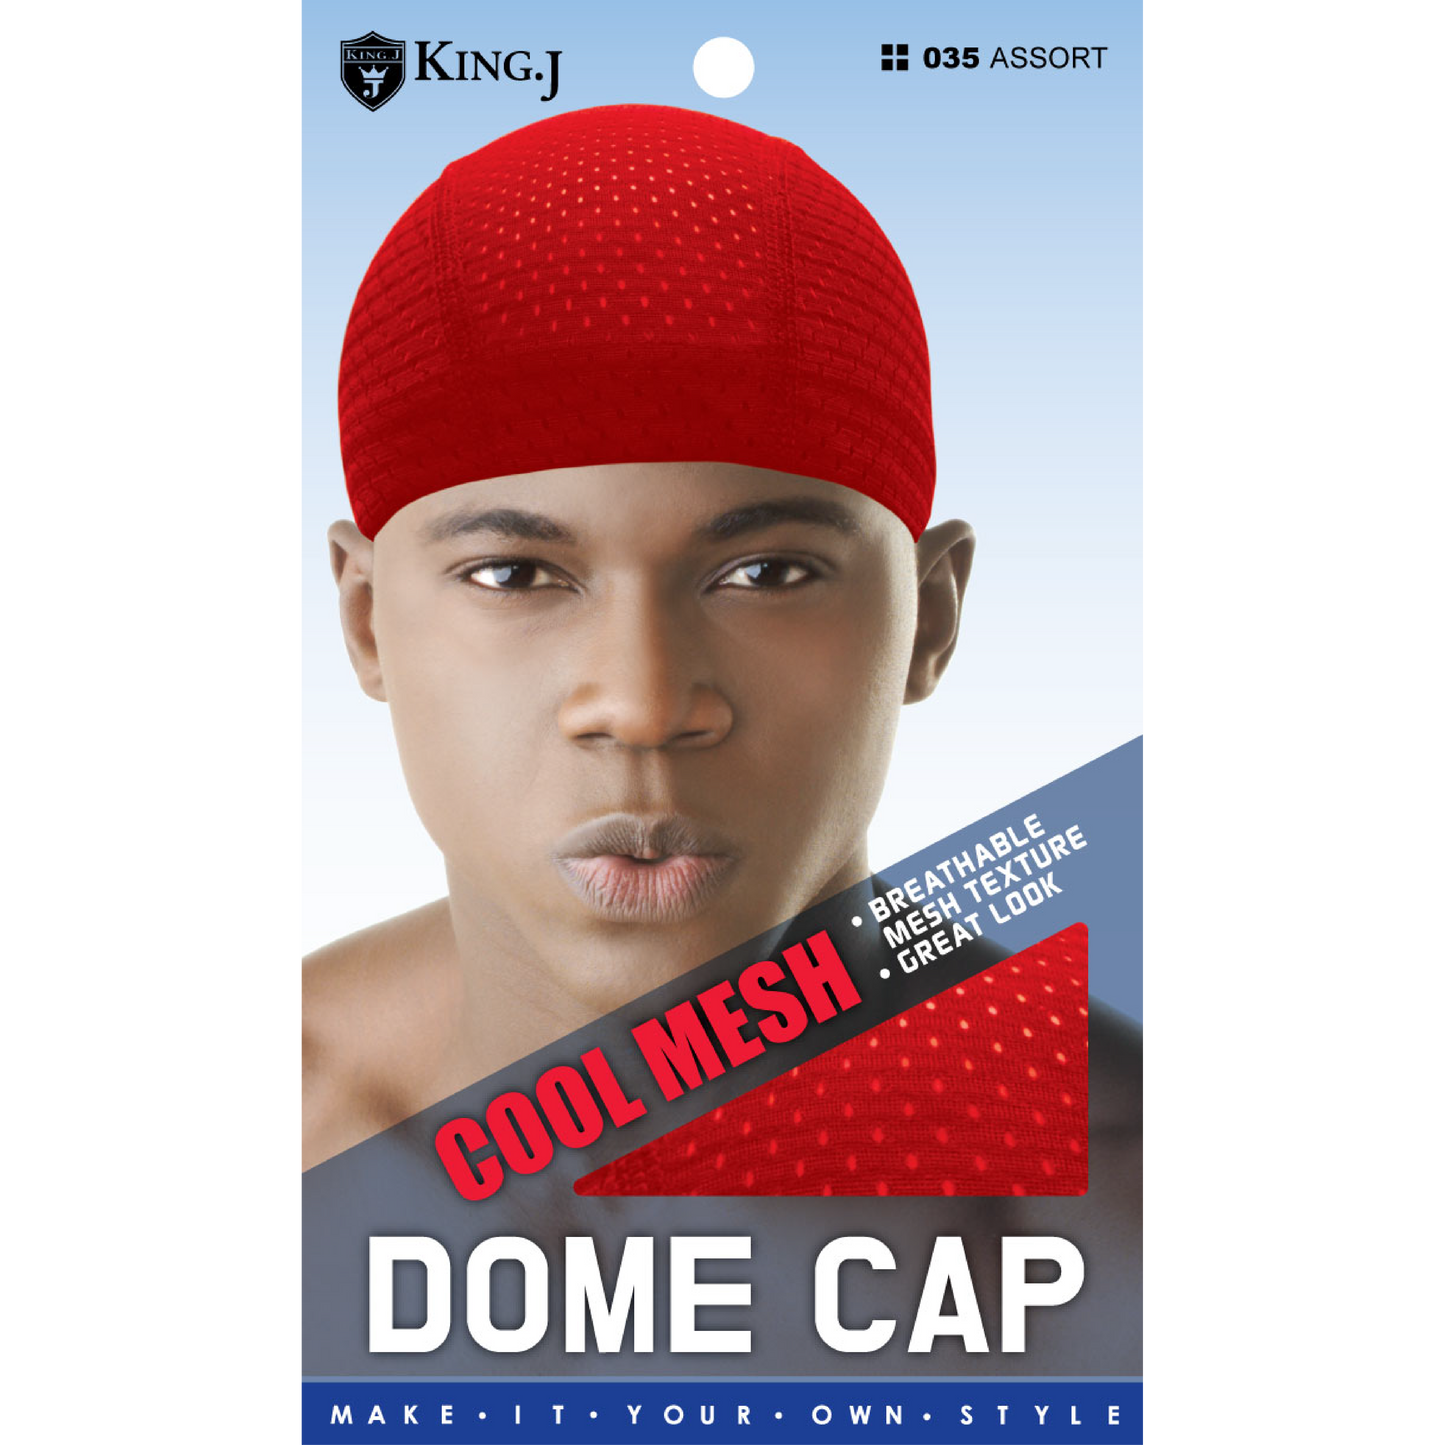 SPANDEX COOL MESH DOME CAP